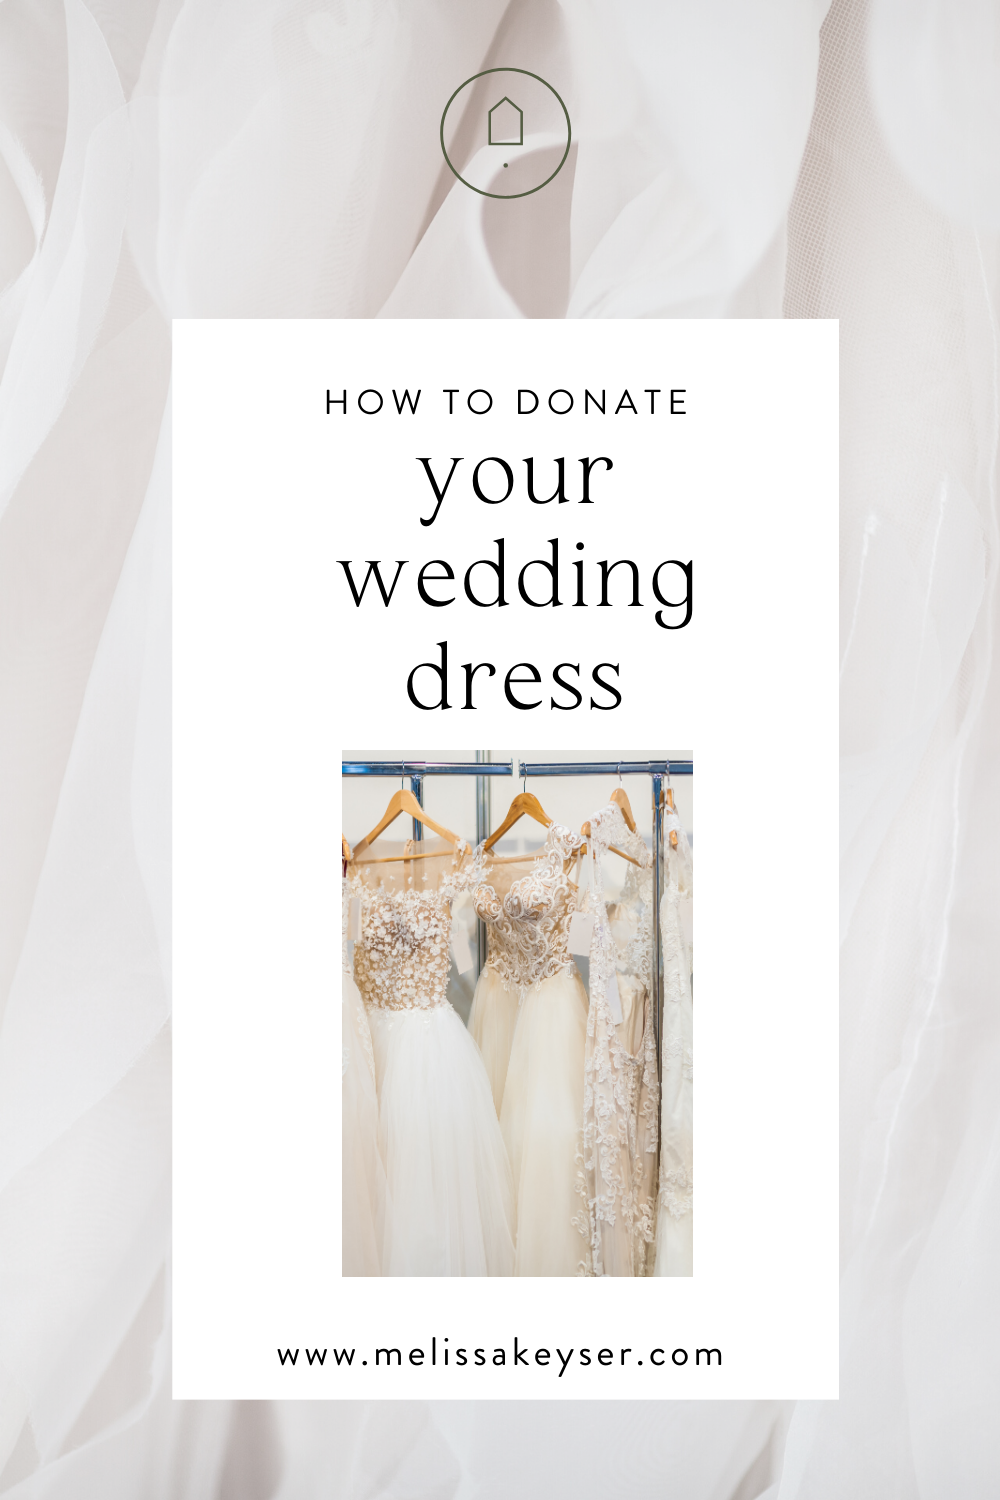 where to donate wedding dresses near me